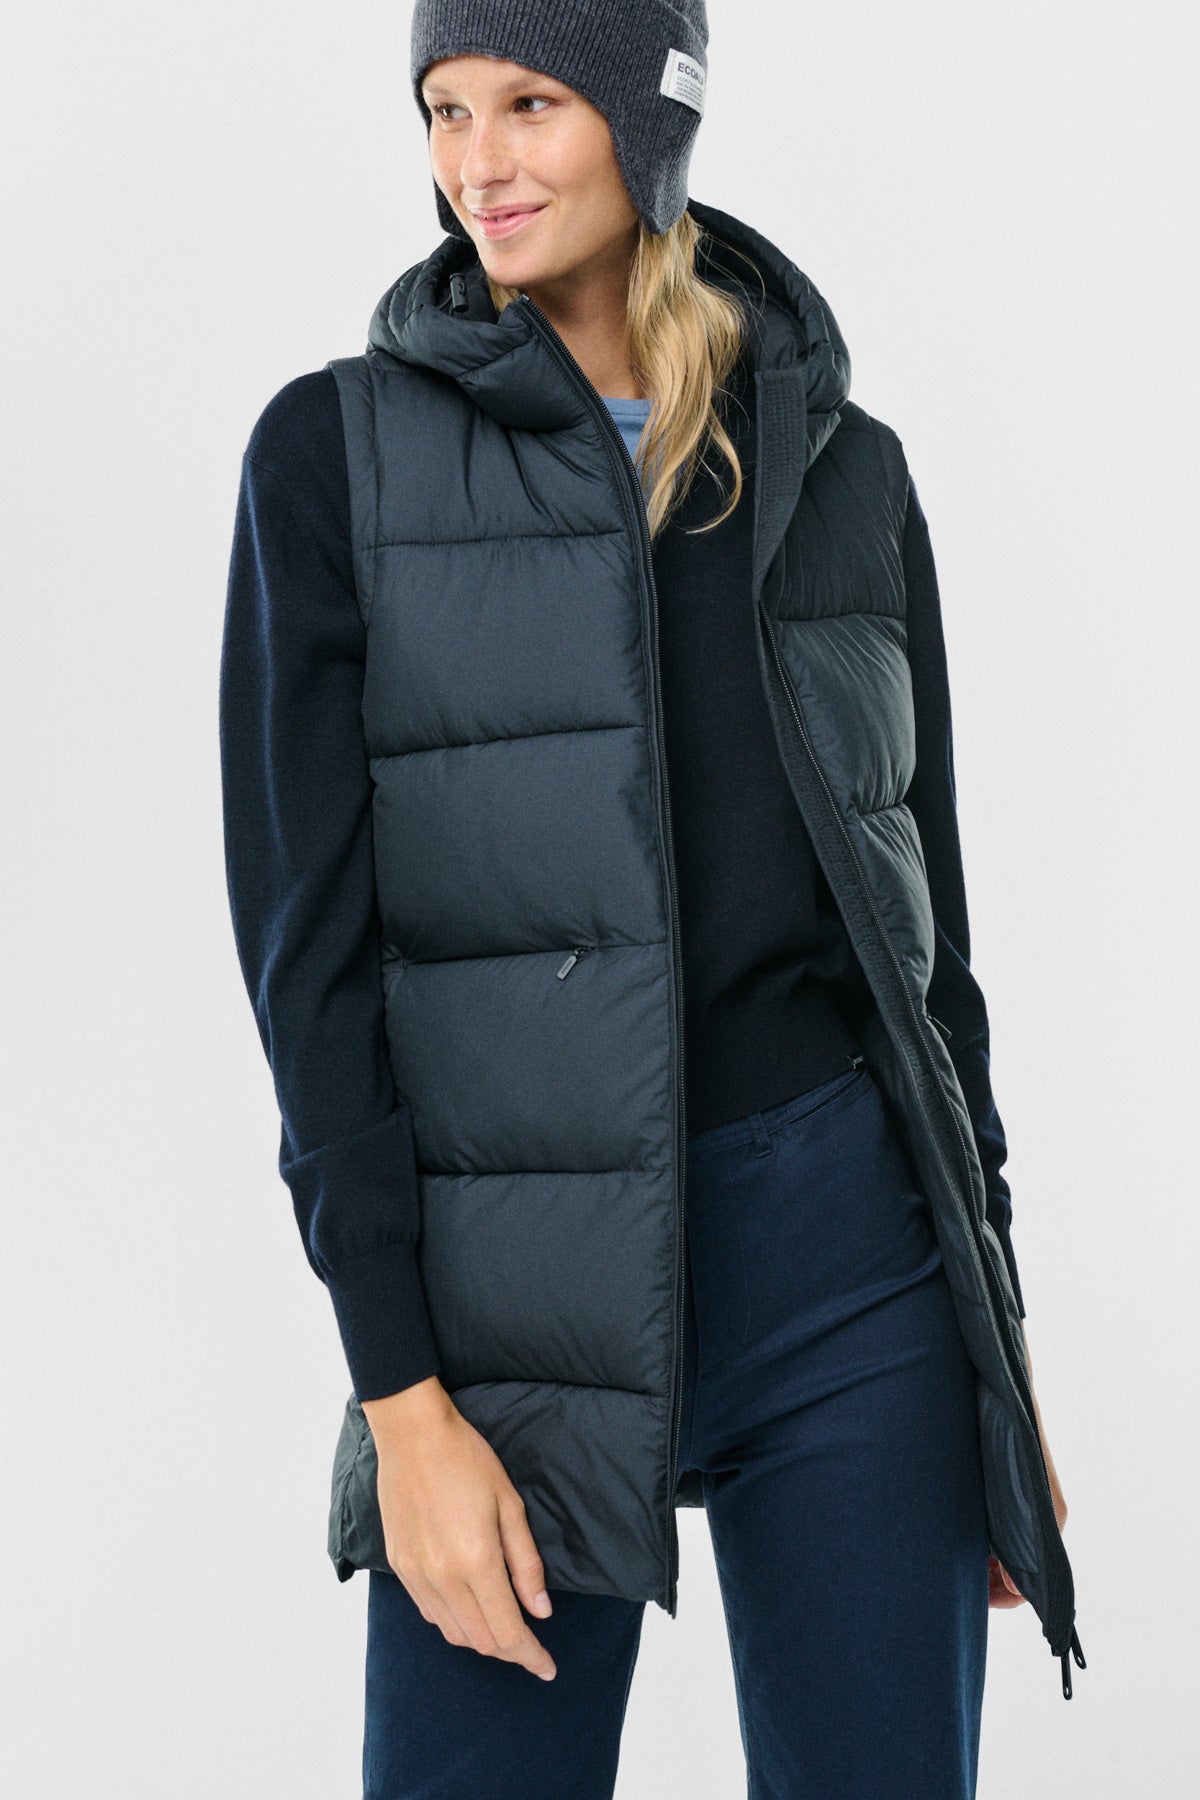 Buy women’s jackets | ECOALF Jackets